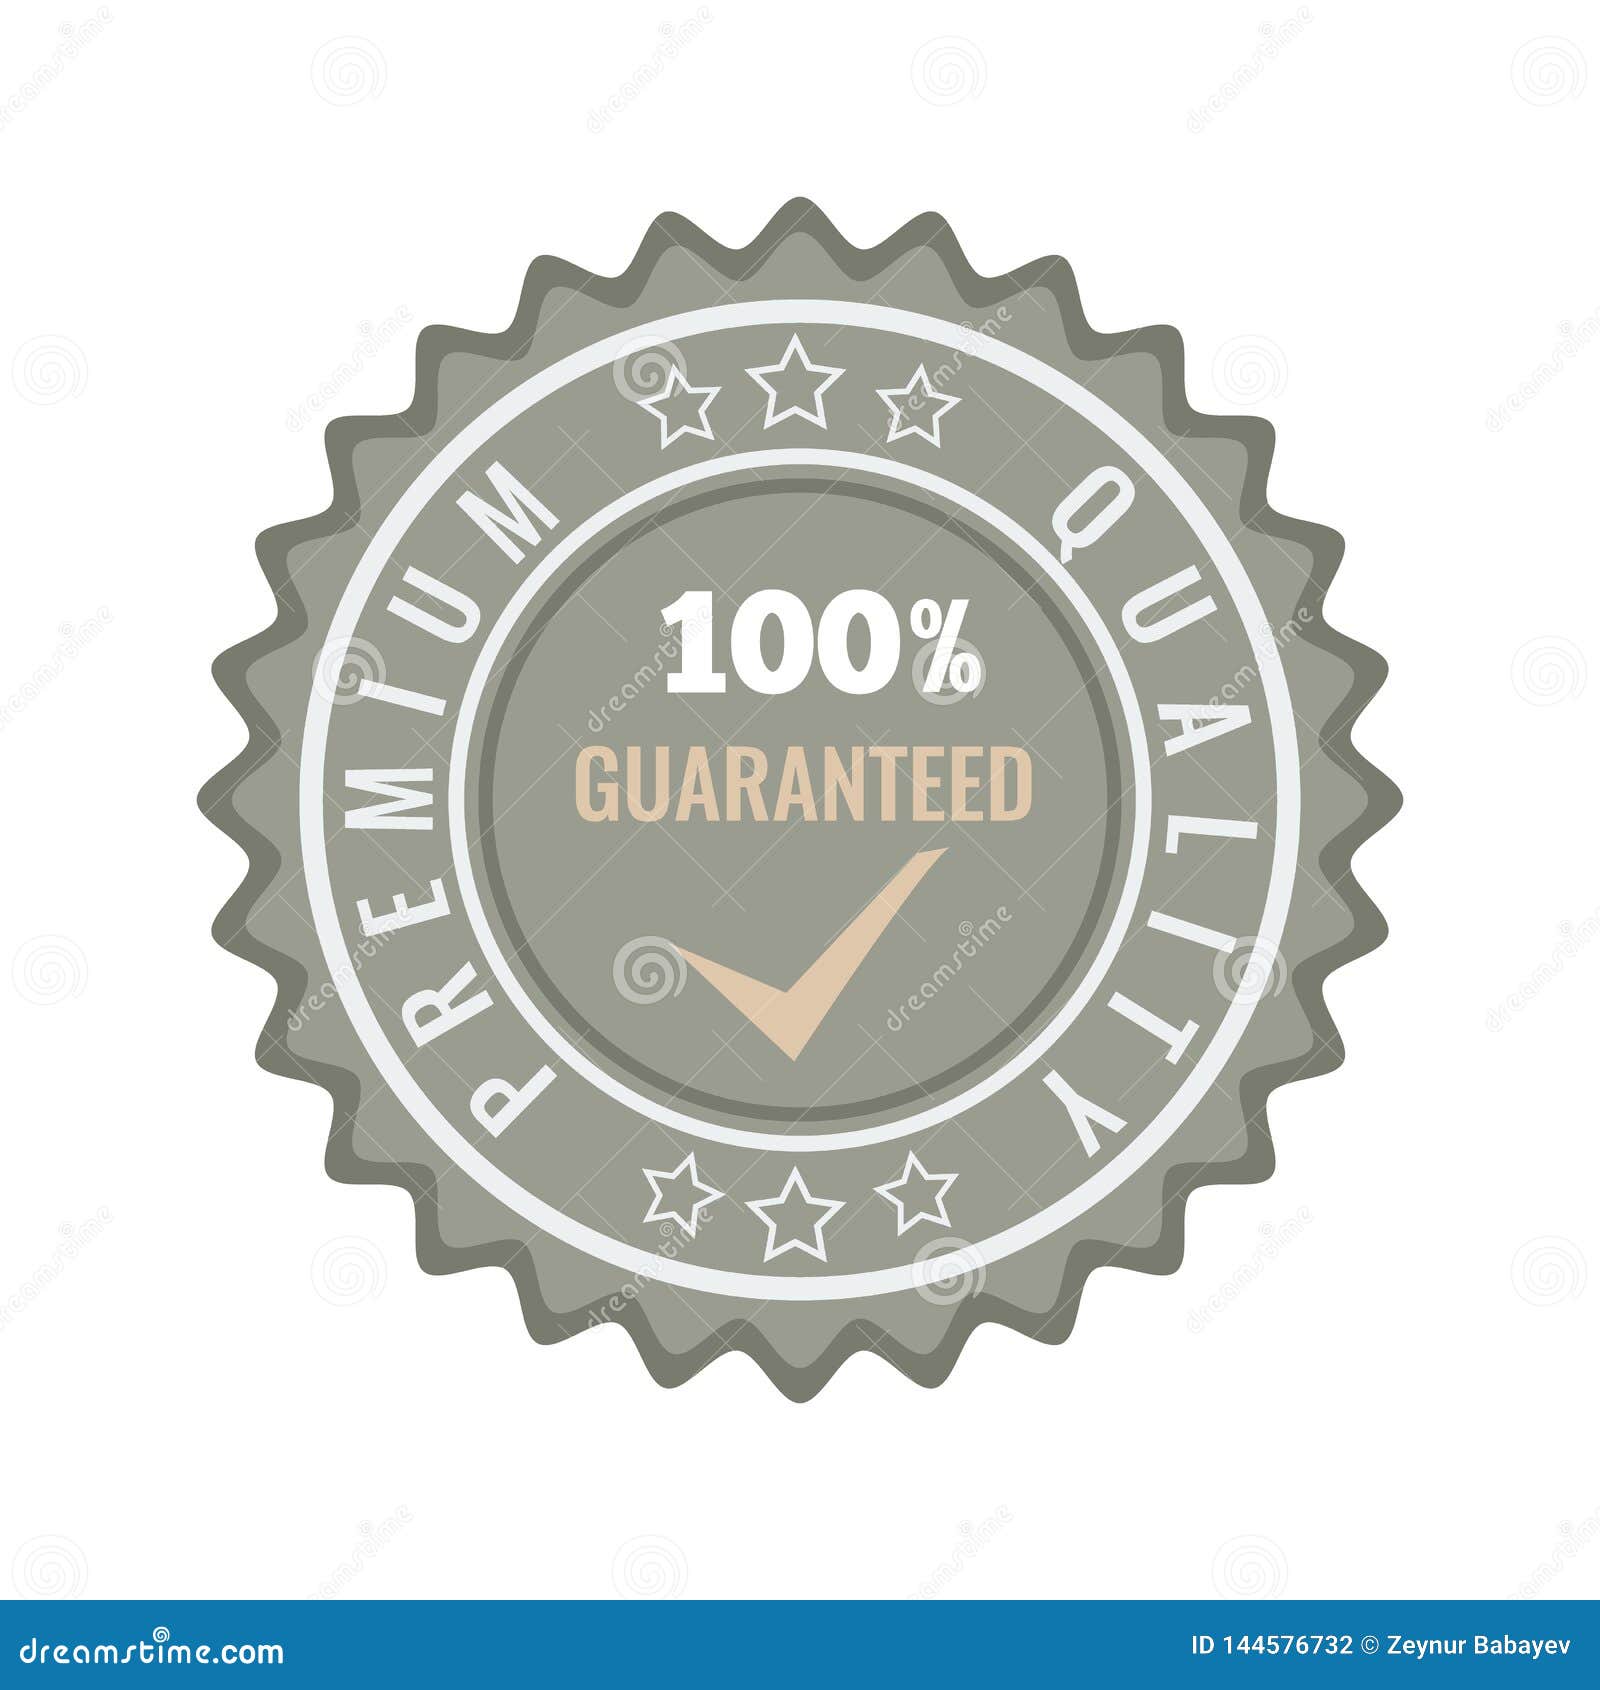 Satisfaction Guaranteed Seal Stamp Badge. Vector Illustration. Stock